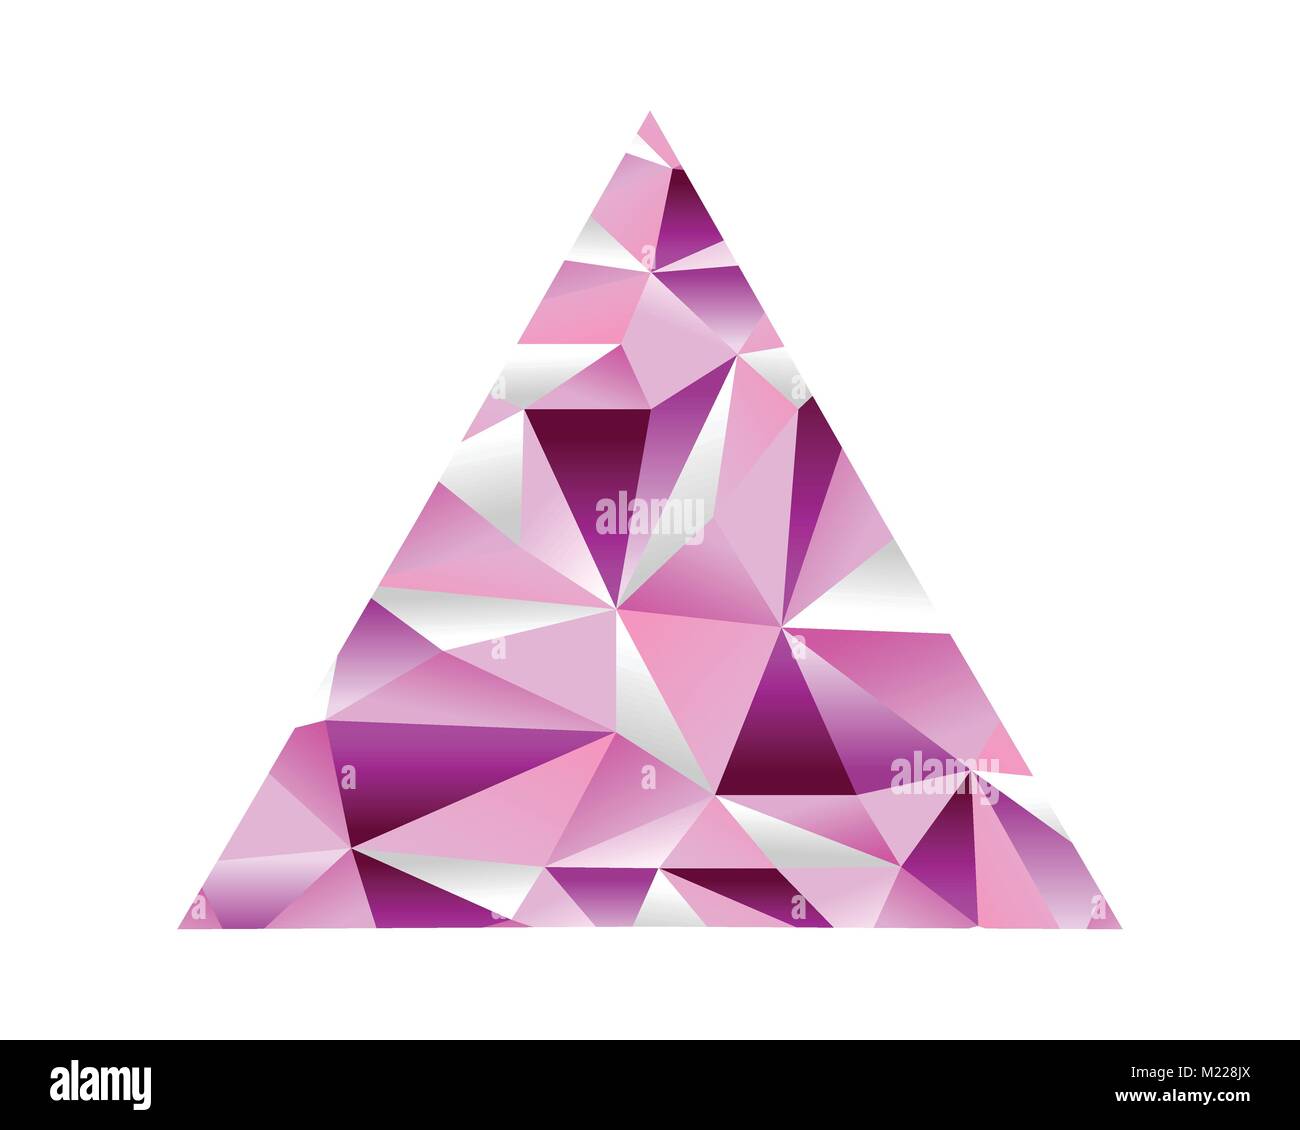 Rosa Saphir Low Poly Dreiecksform Vektorgrafik Hintergrund Design Stock Vektor